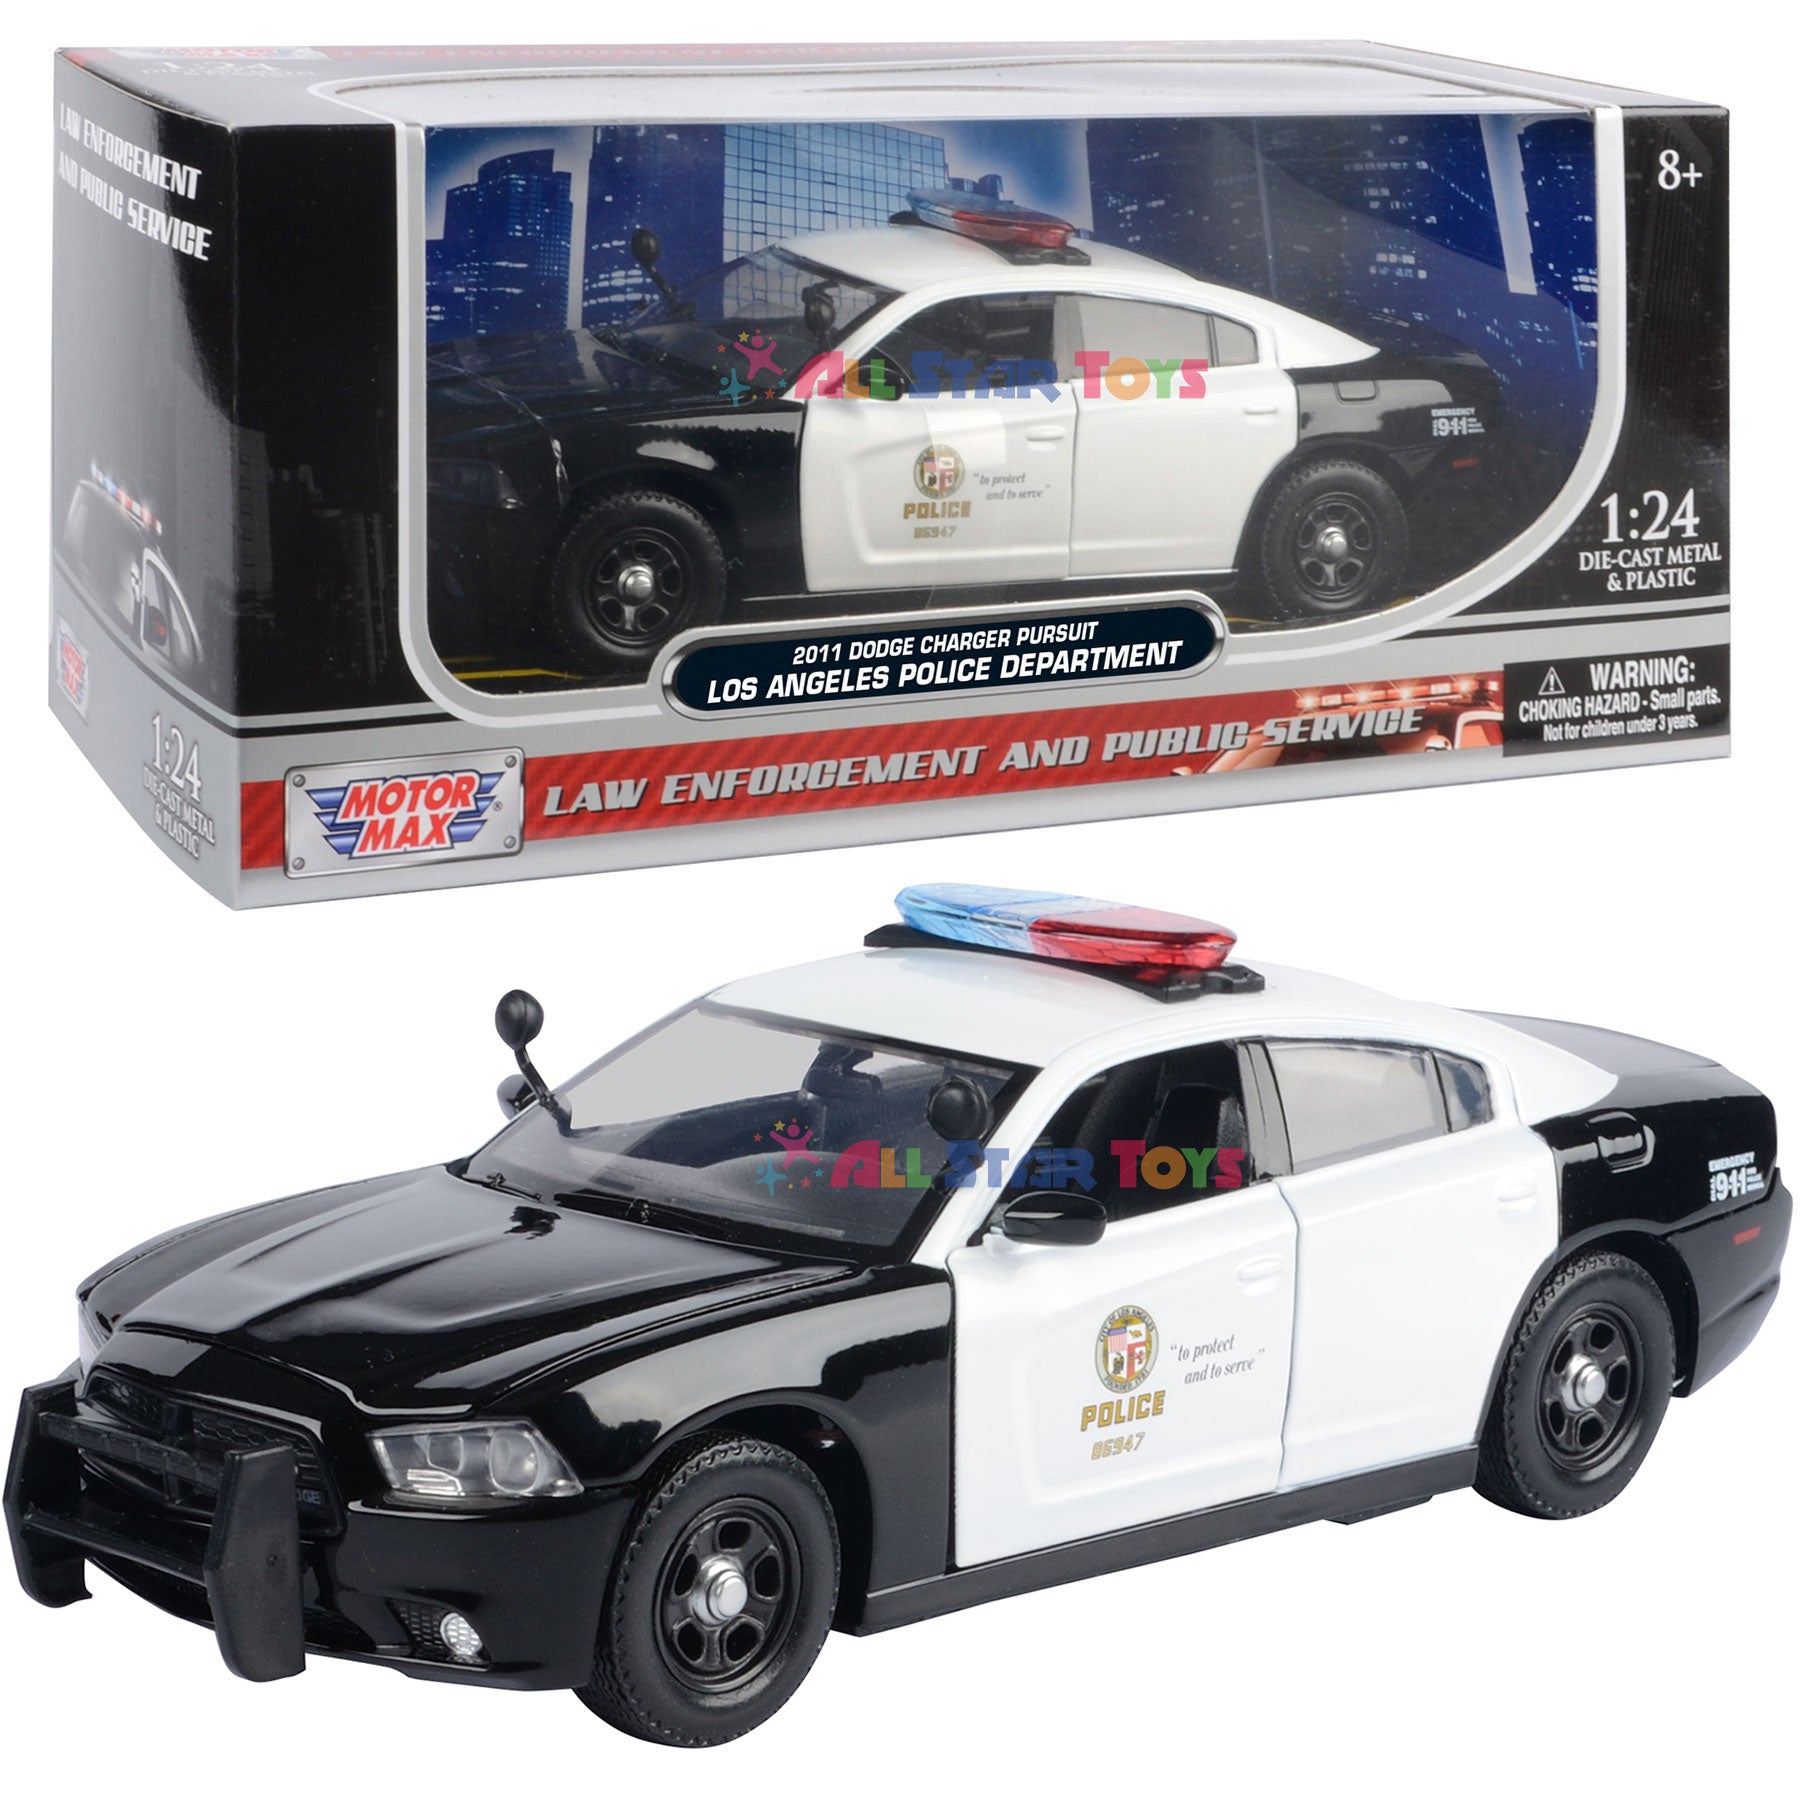 police officer car toys